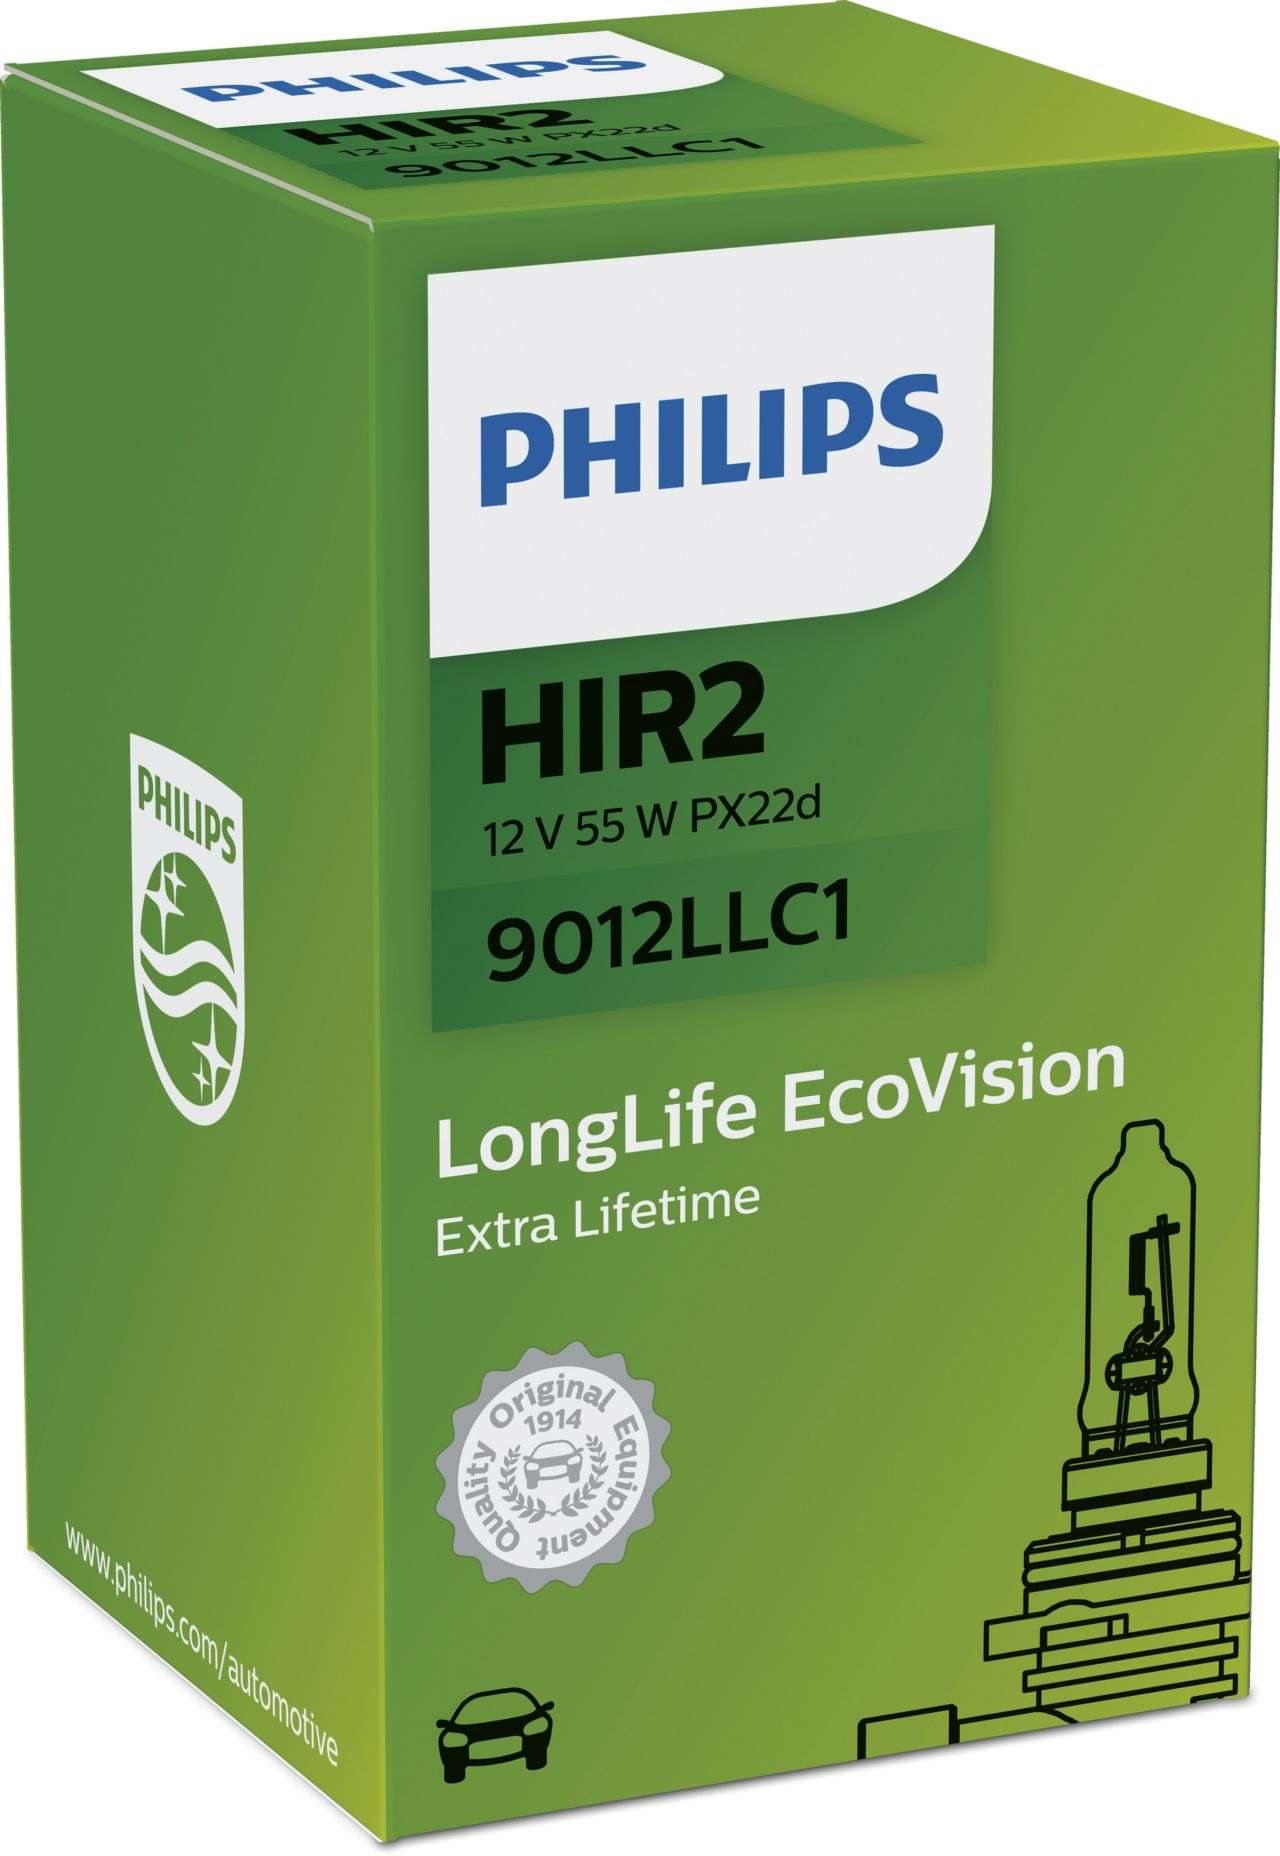 HIR2 12V 55W PX22d LongerLife 3x life time 1 St. Philips - Auto-Lamp Berlin